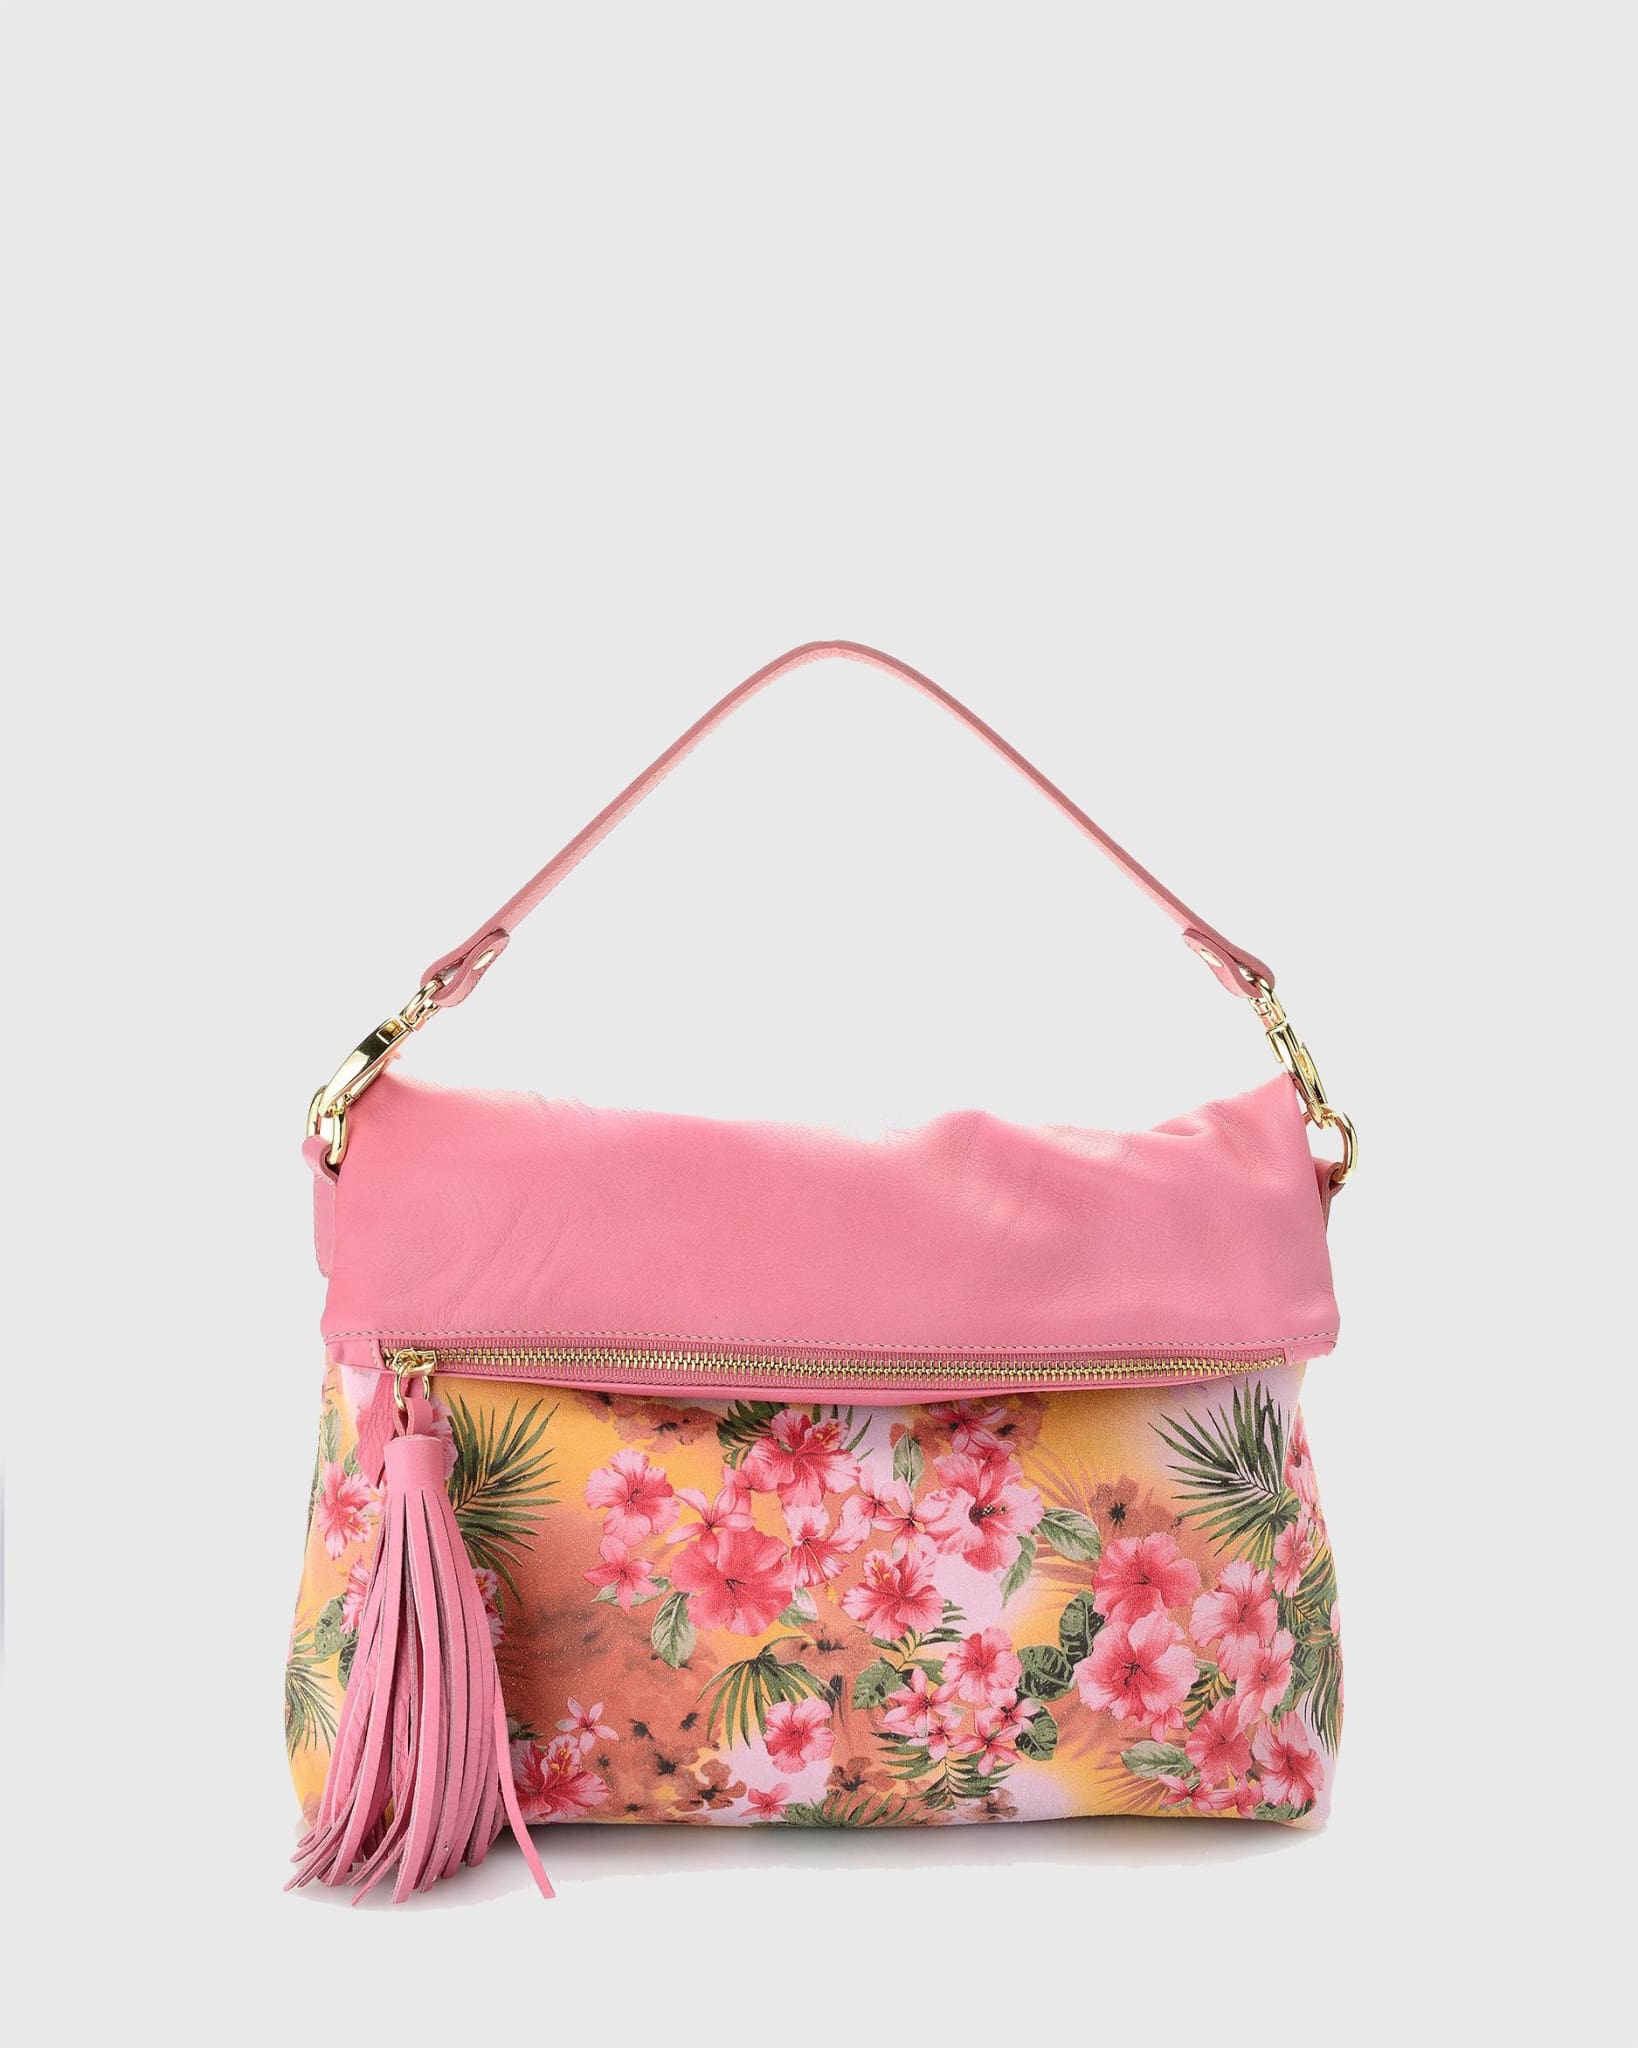 Kaylee - Pink Floral Bags | Pietro NYC